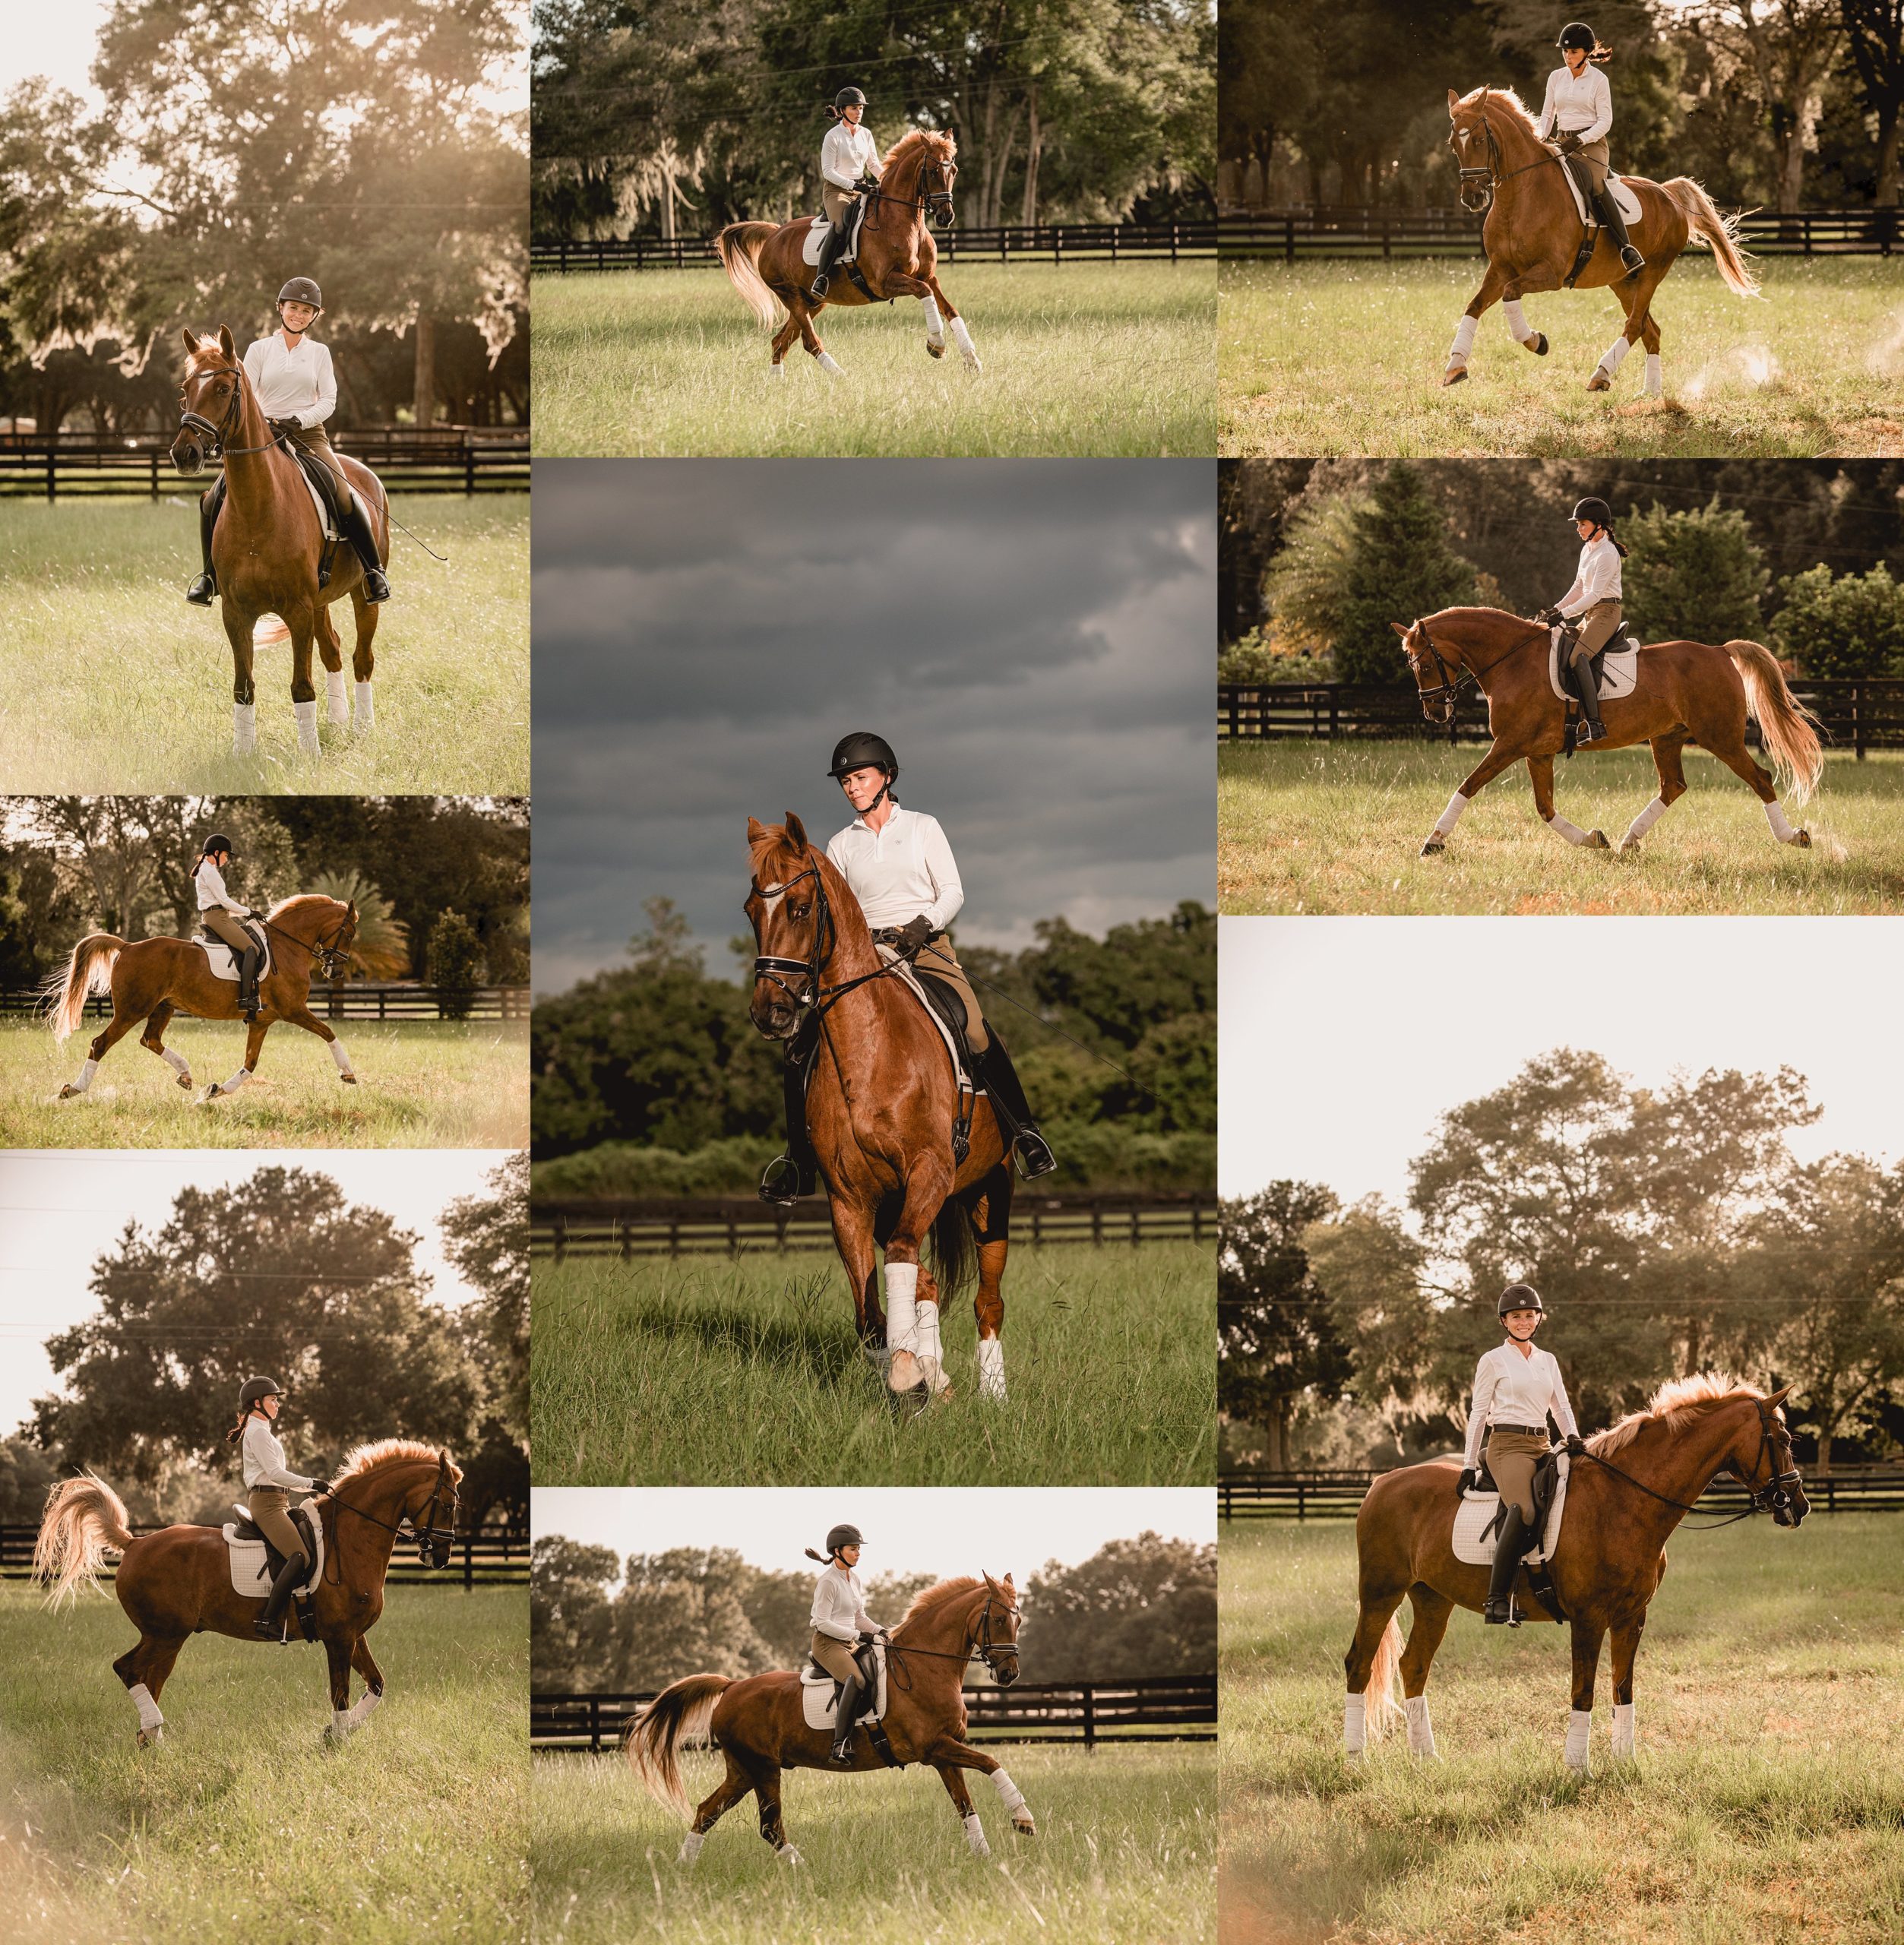 Ocala dressage horse photographer takes riding photos during sunset.